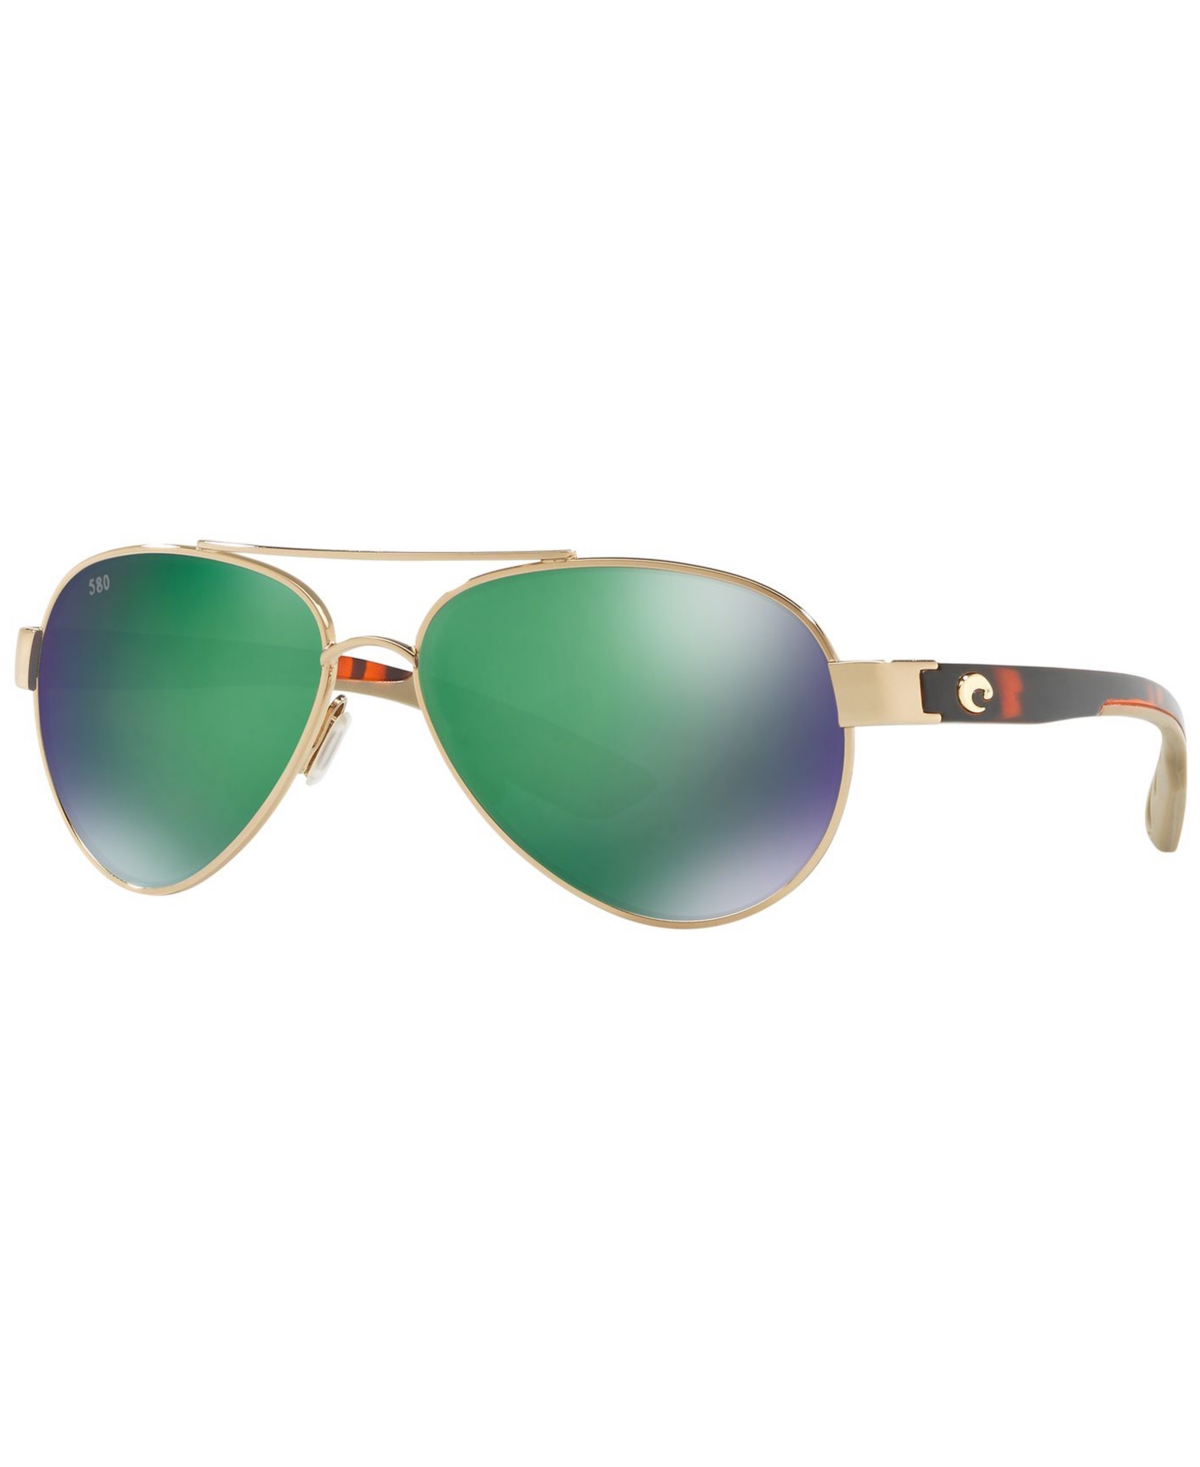 Women's Polarized Sunglasses, Cdm Loreto 57 - GOLD PINK SHINY/GREEN MIR POL